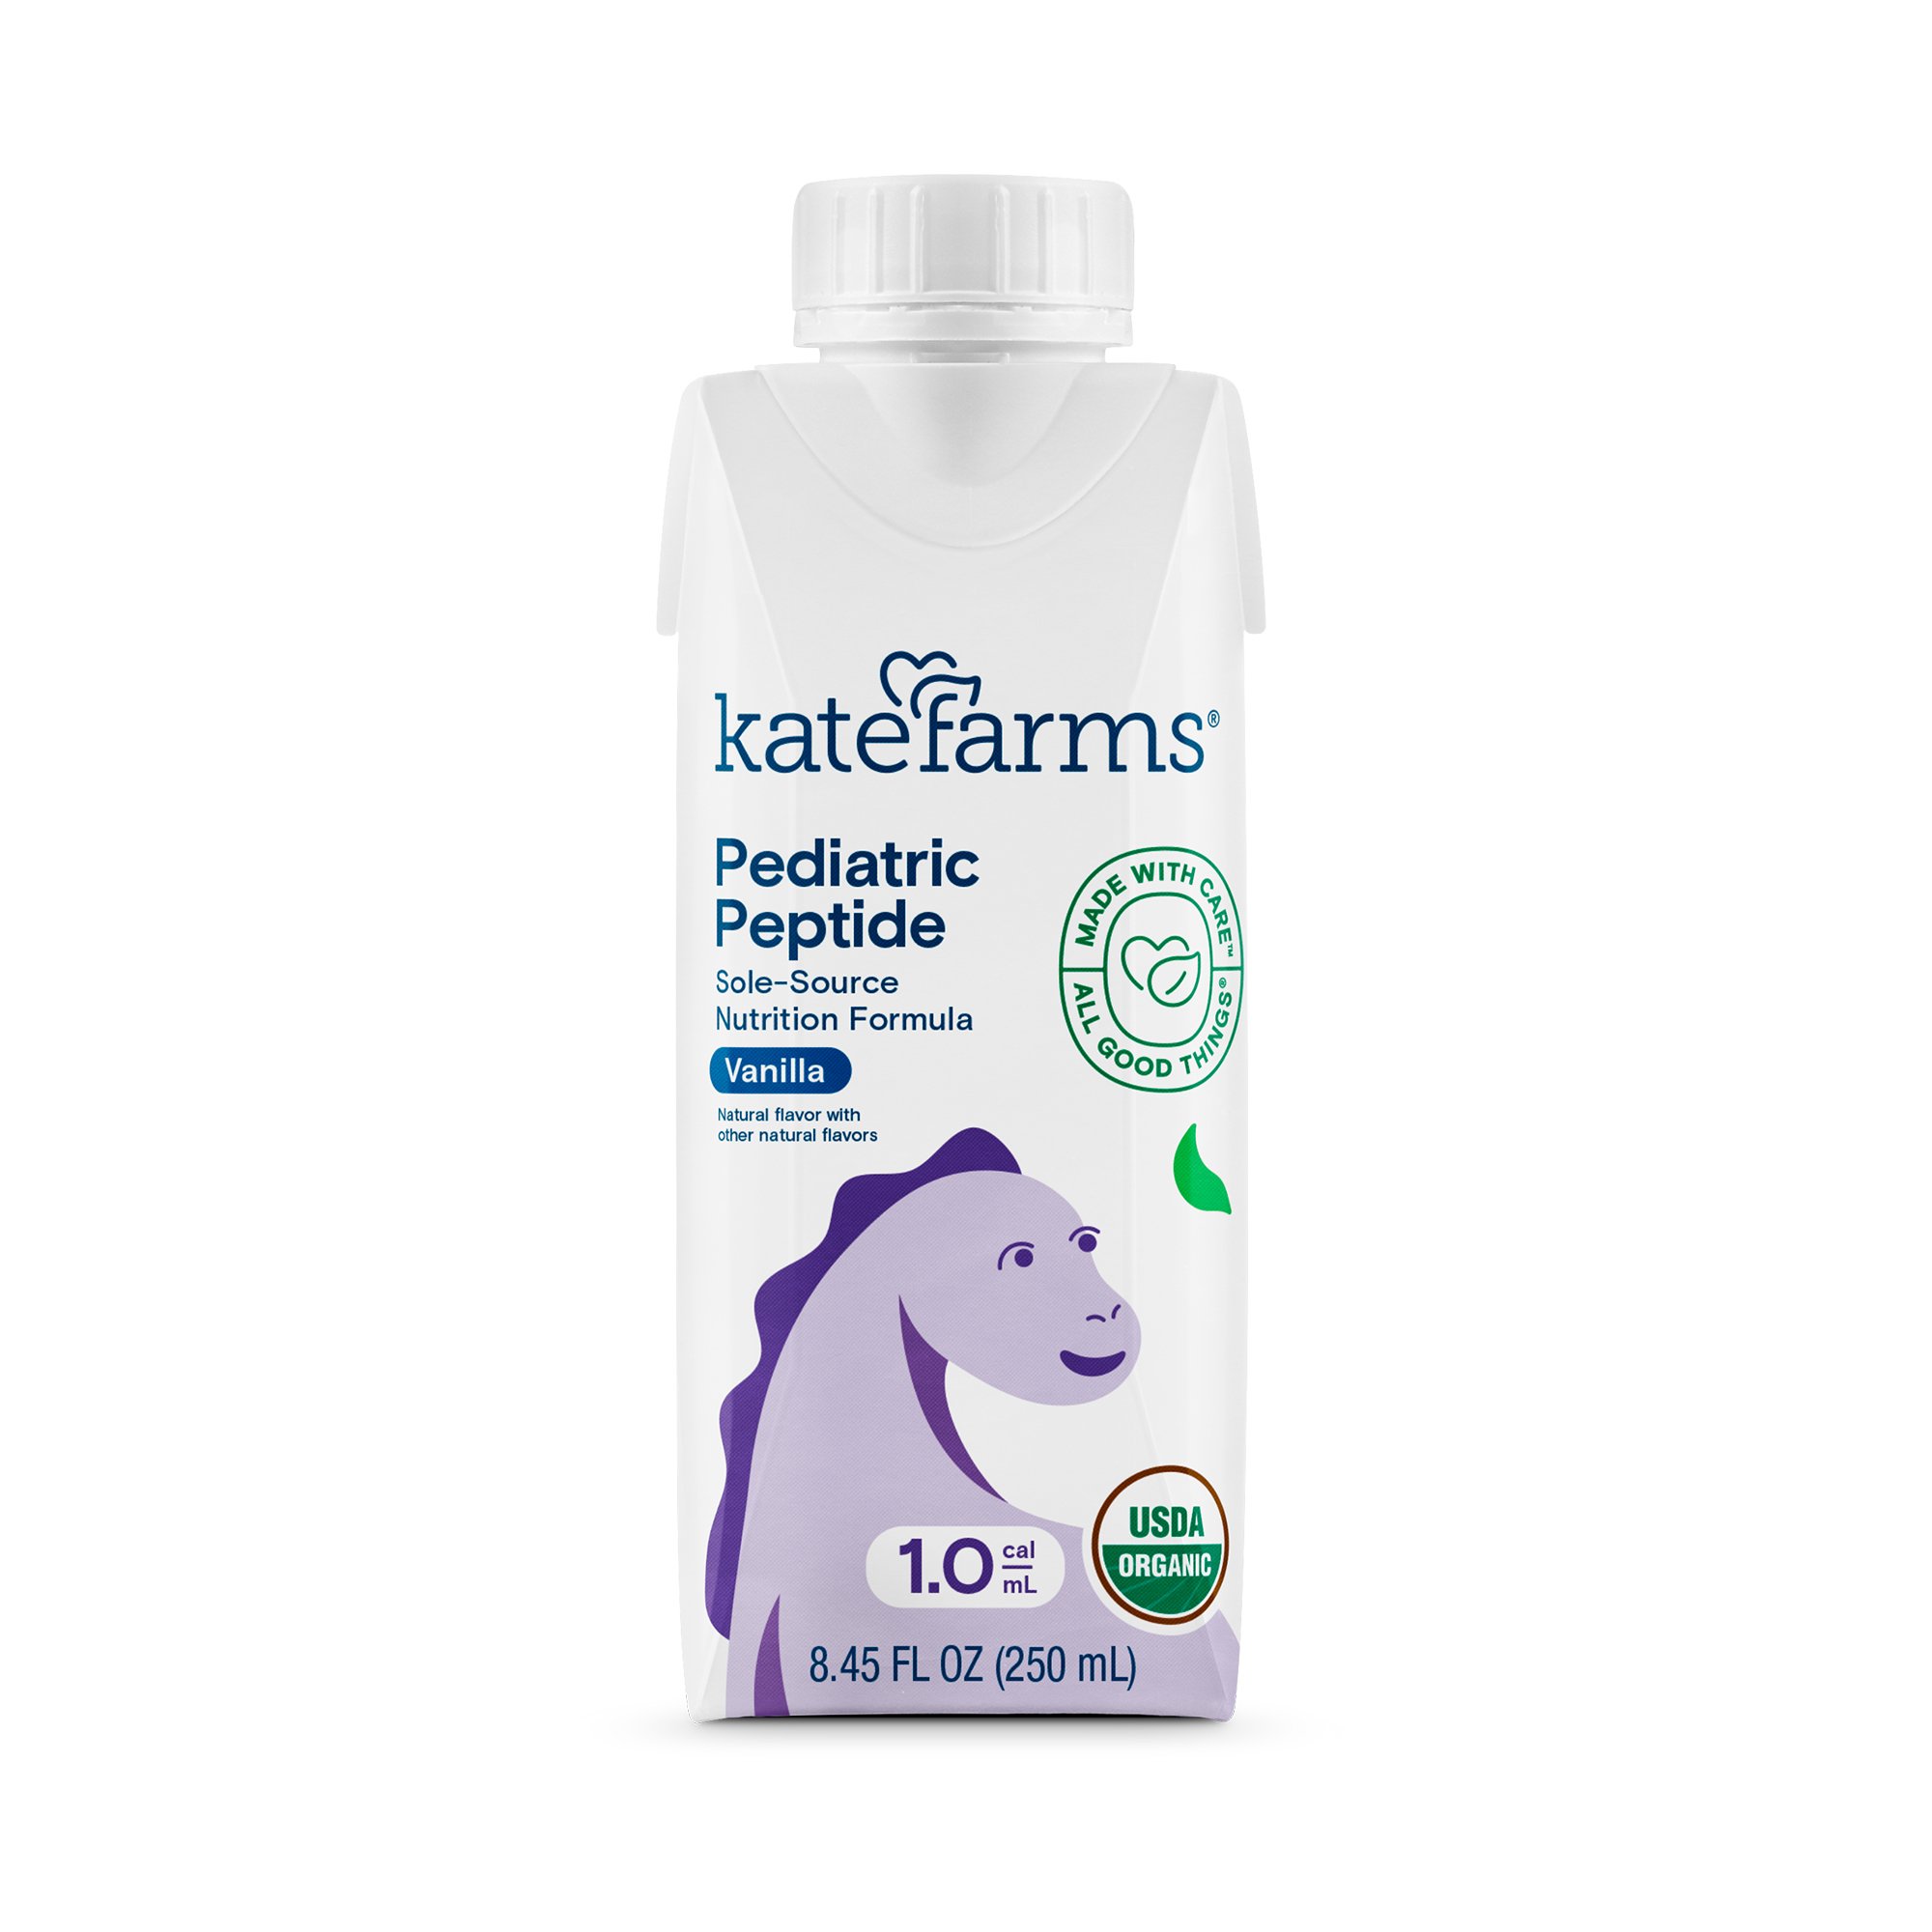 Kate Farms Pediatric Peptide 1.0 Sole-Source Nutrition Formula, Vanilla Flavor, 8.45-ounce carton MK 1170425